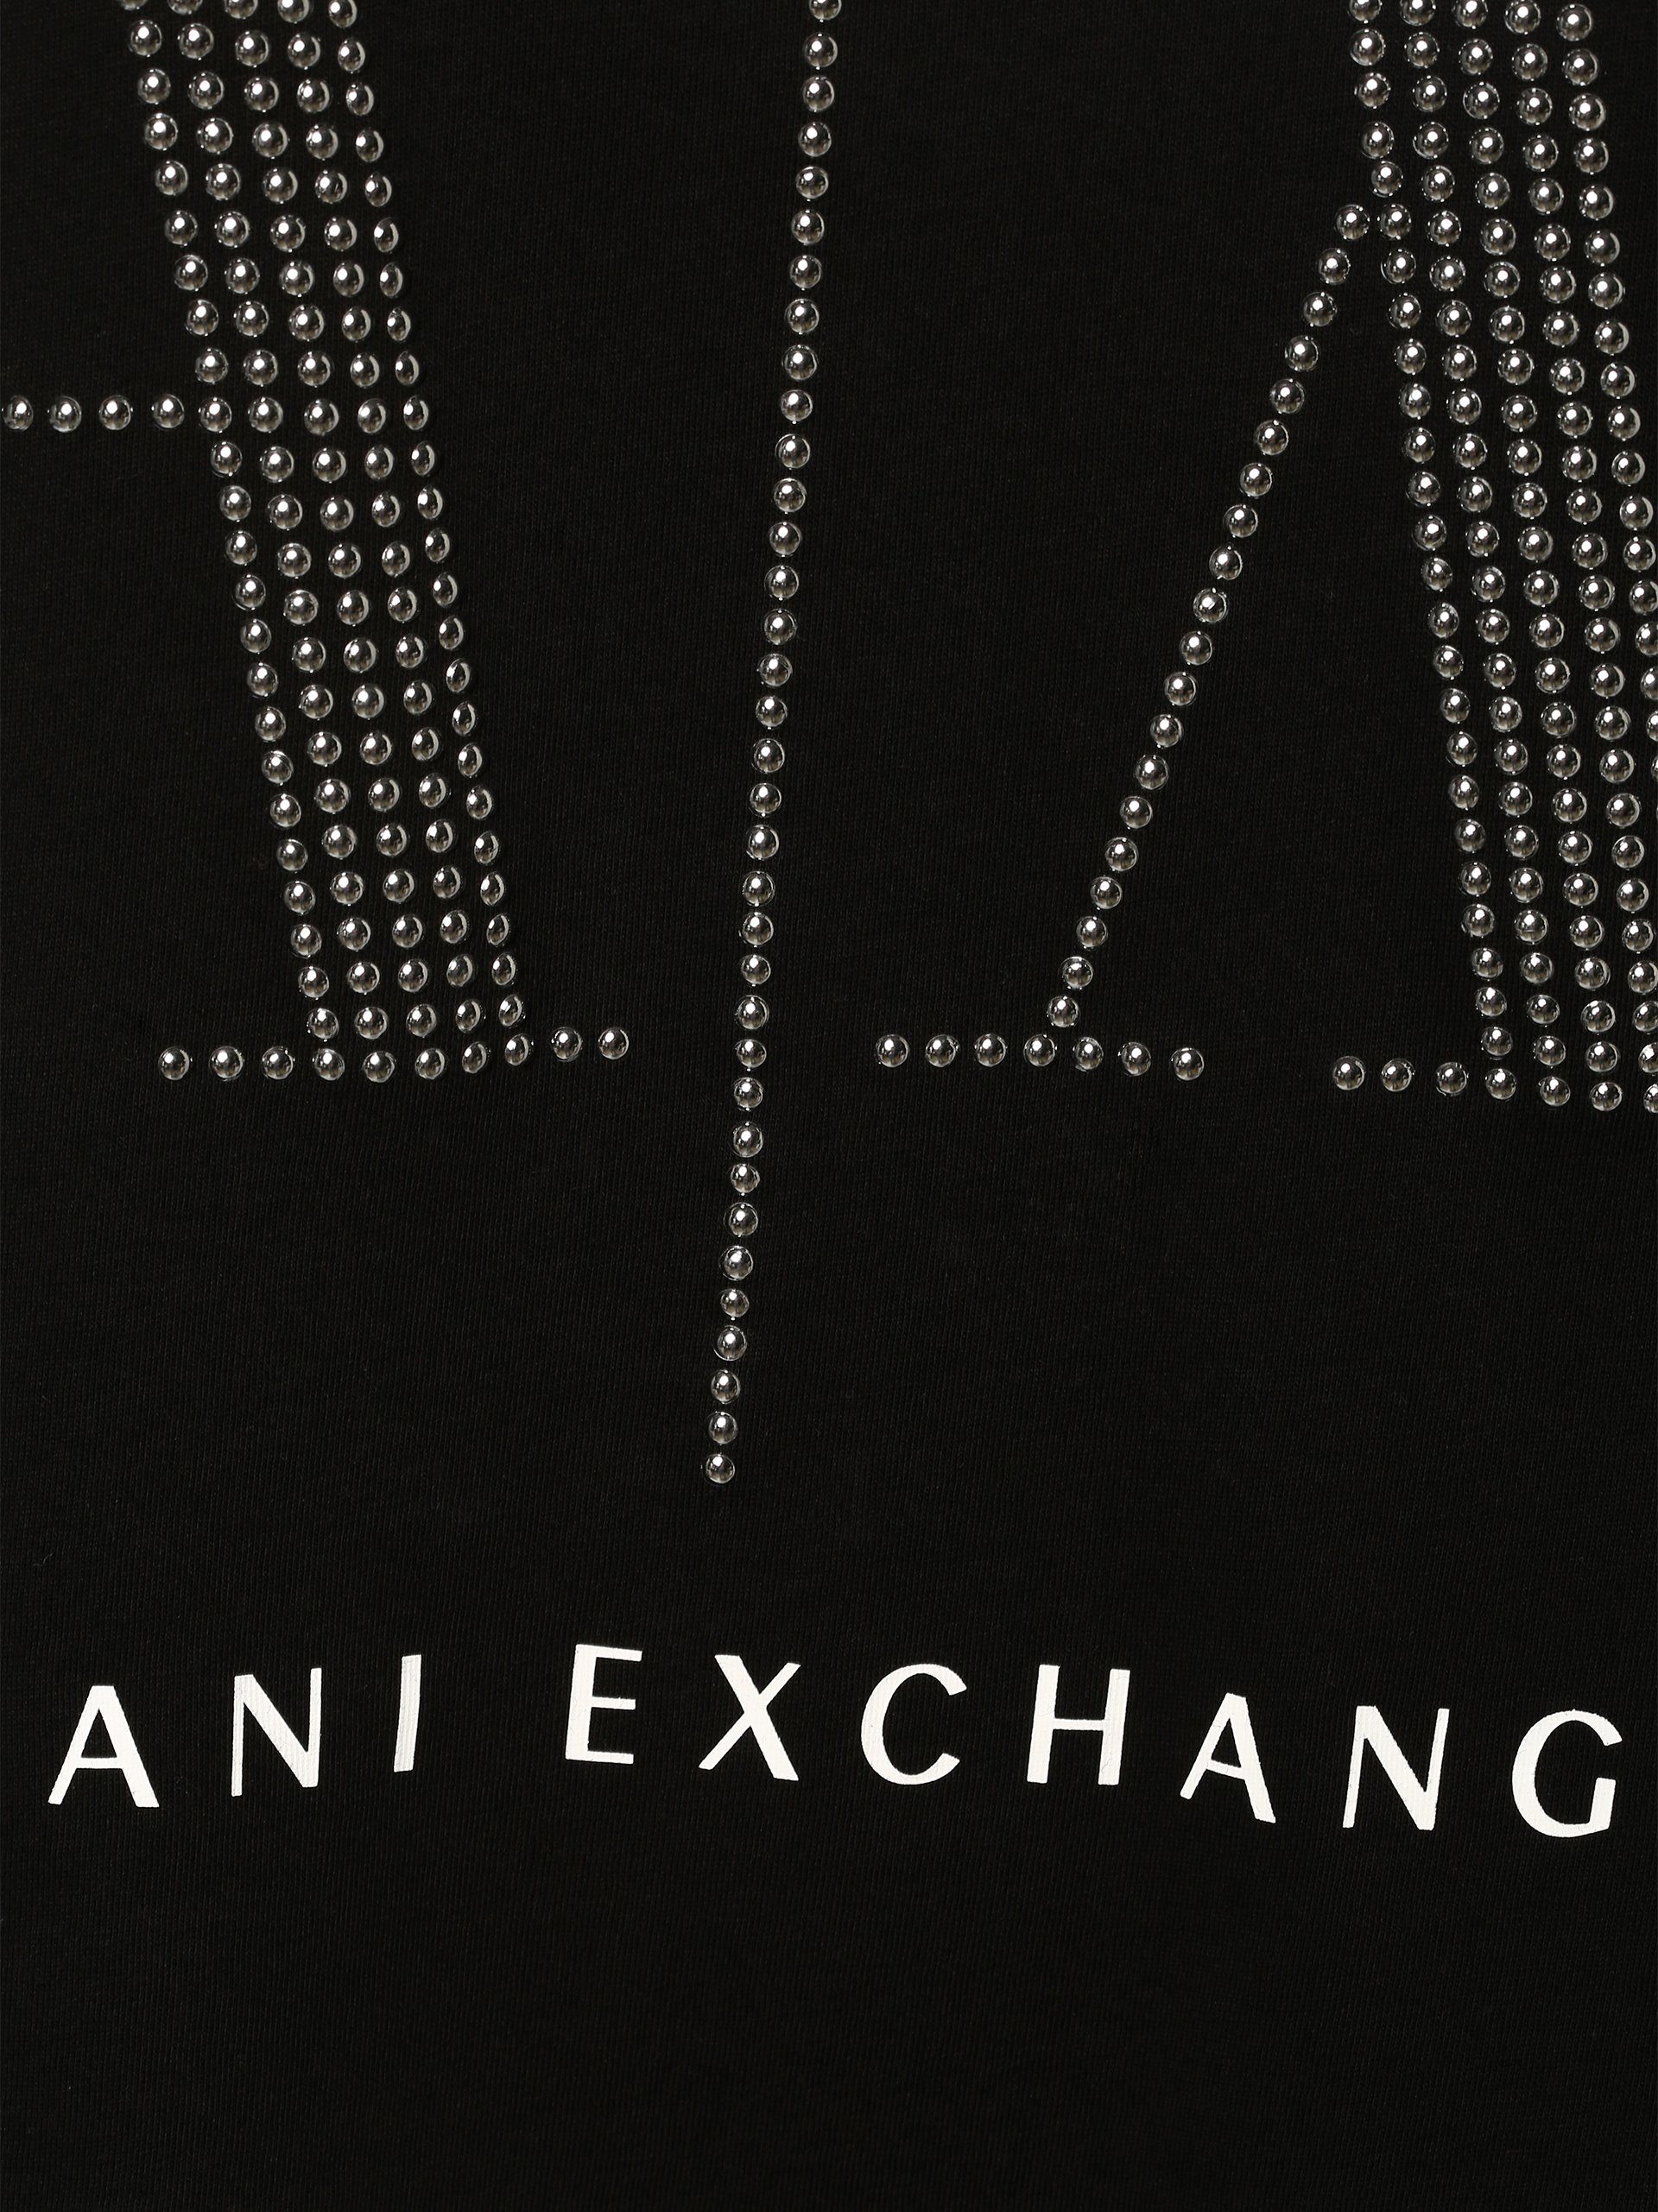 Exchange Armani Connected schwarz T-Shirt